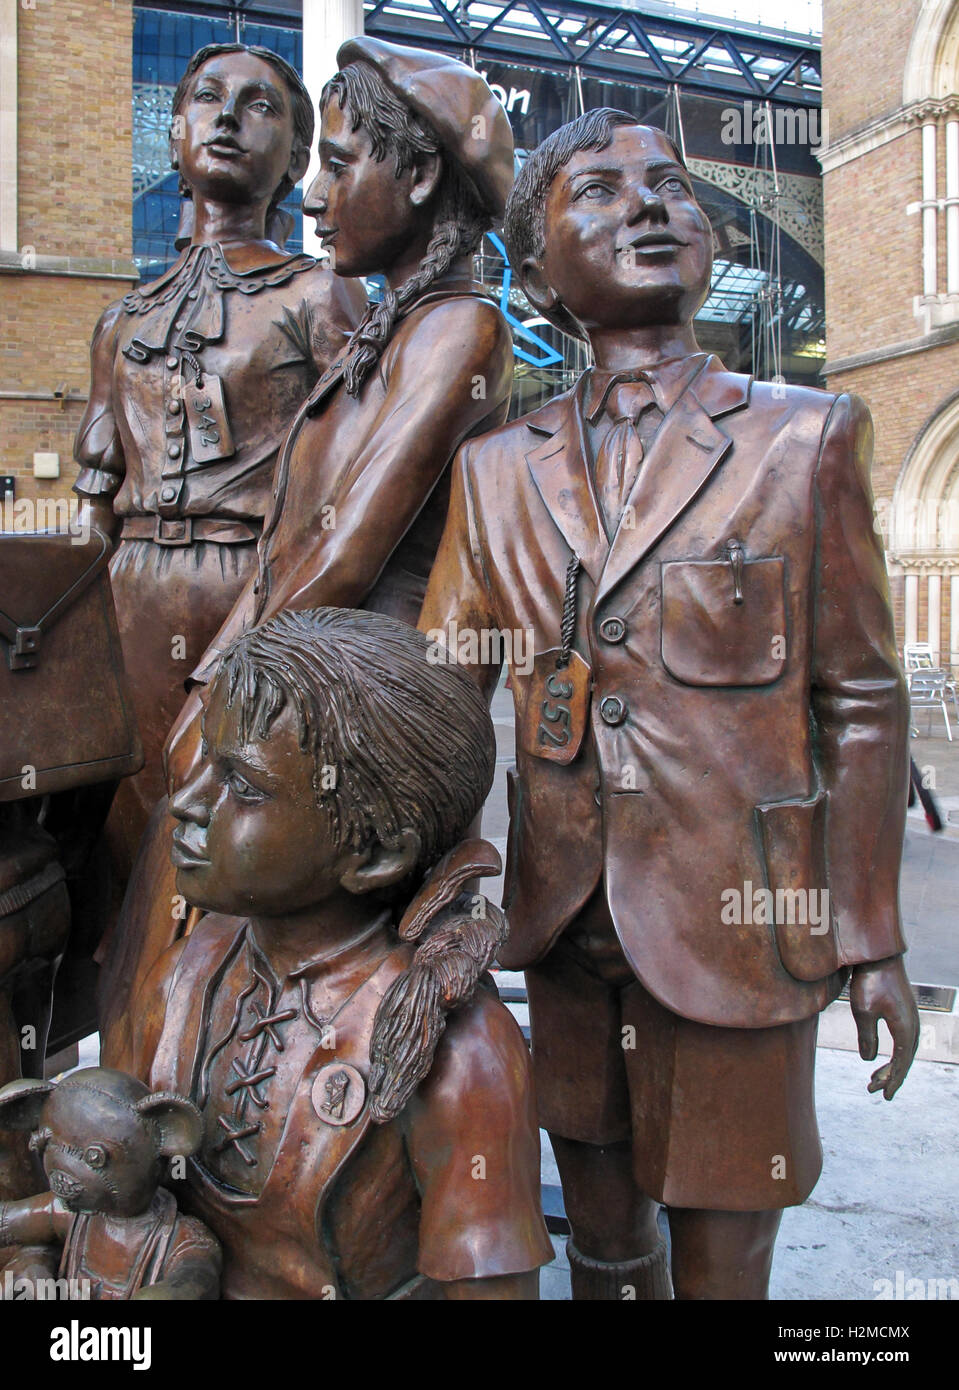 Kindertransport statues, Liverpool St station,London,England,UK Stock Photo